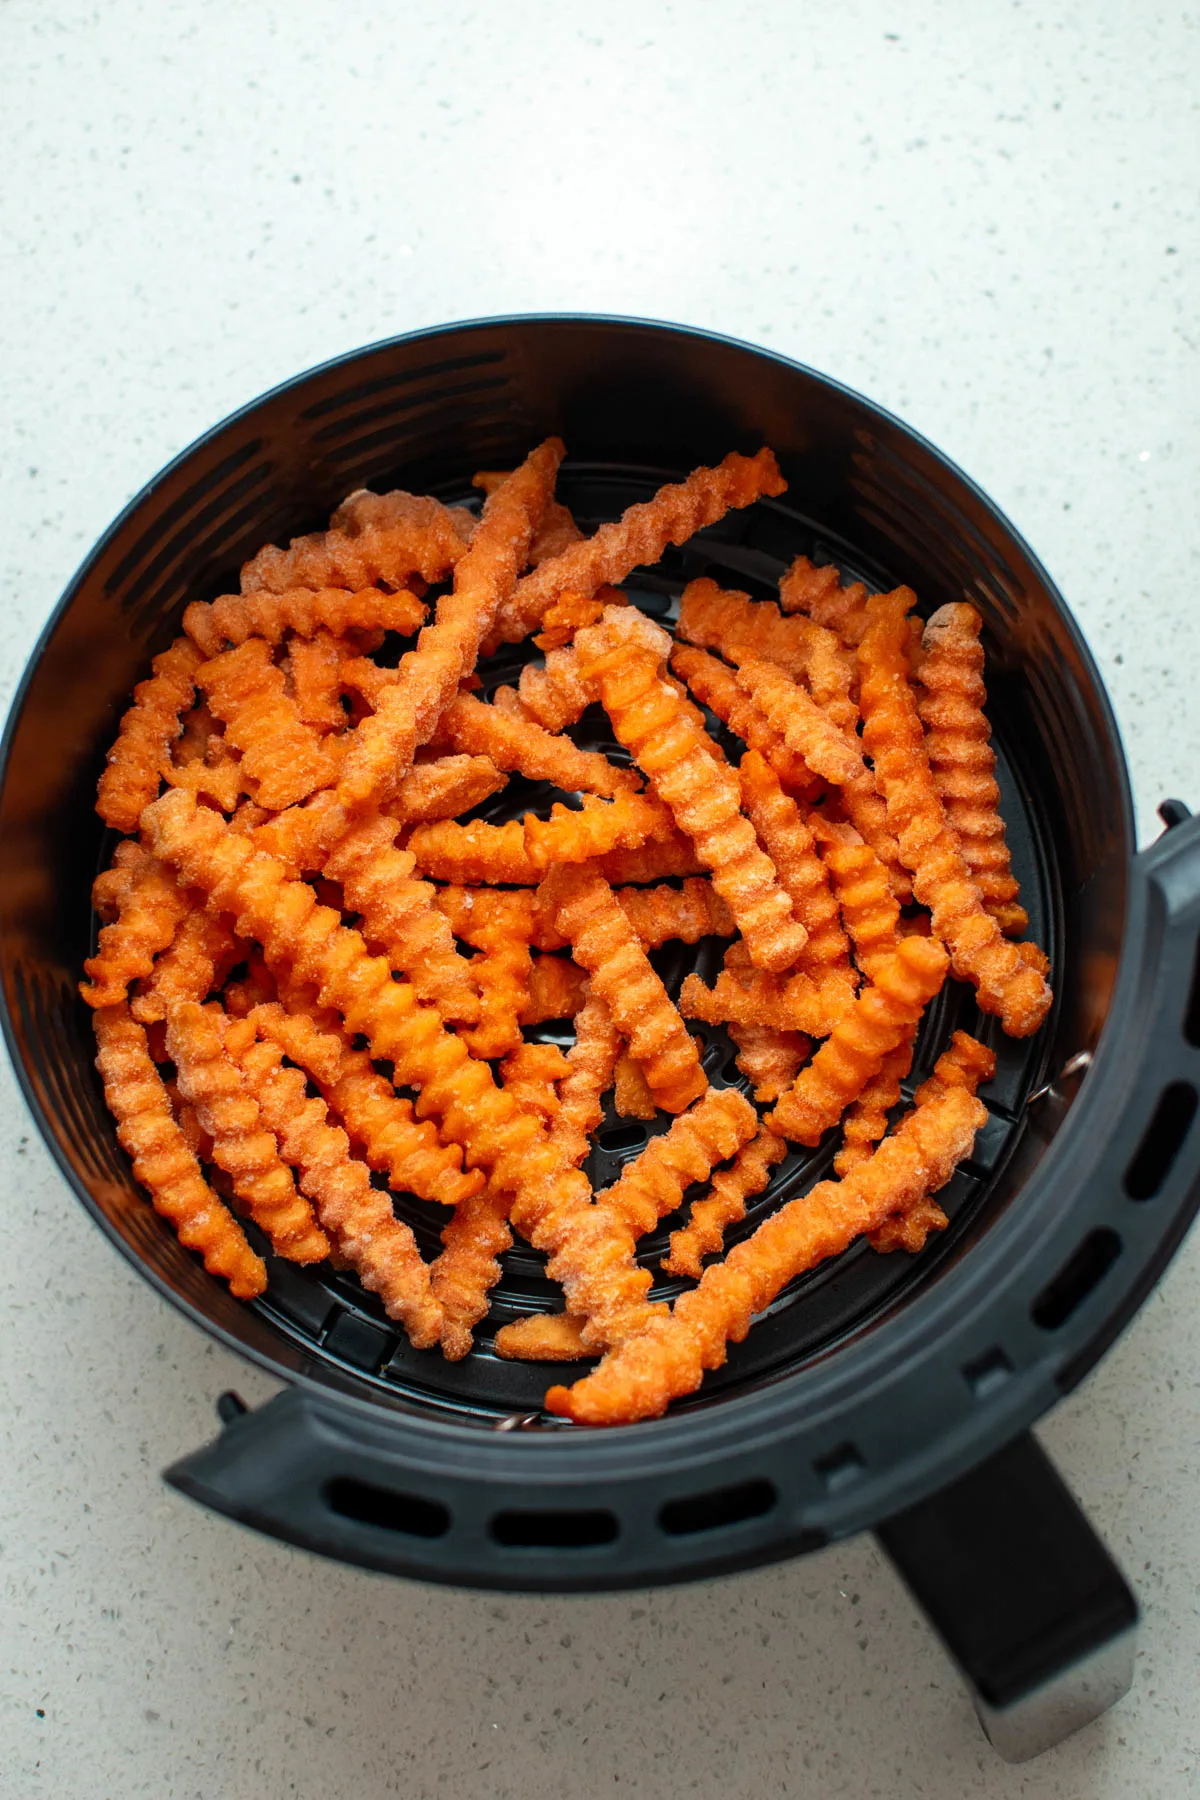 Frozen sweet potato fries in air fryer basket on quartz countertop.